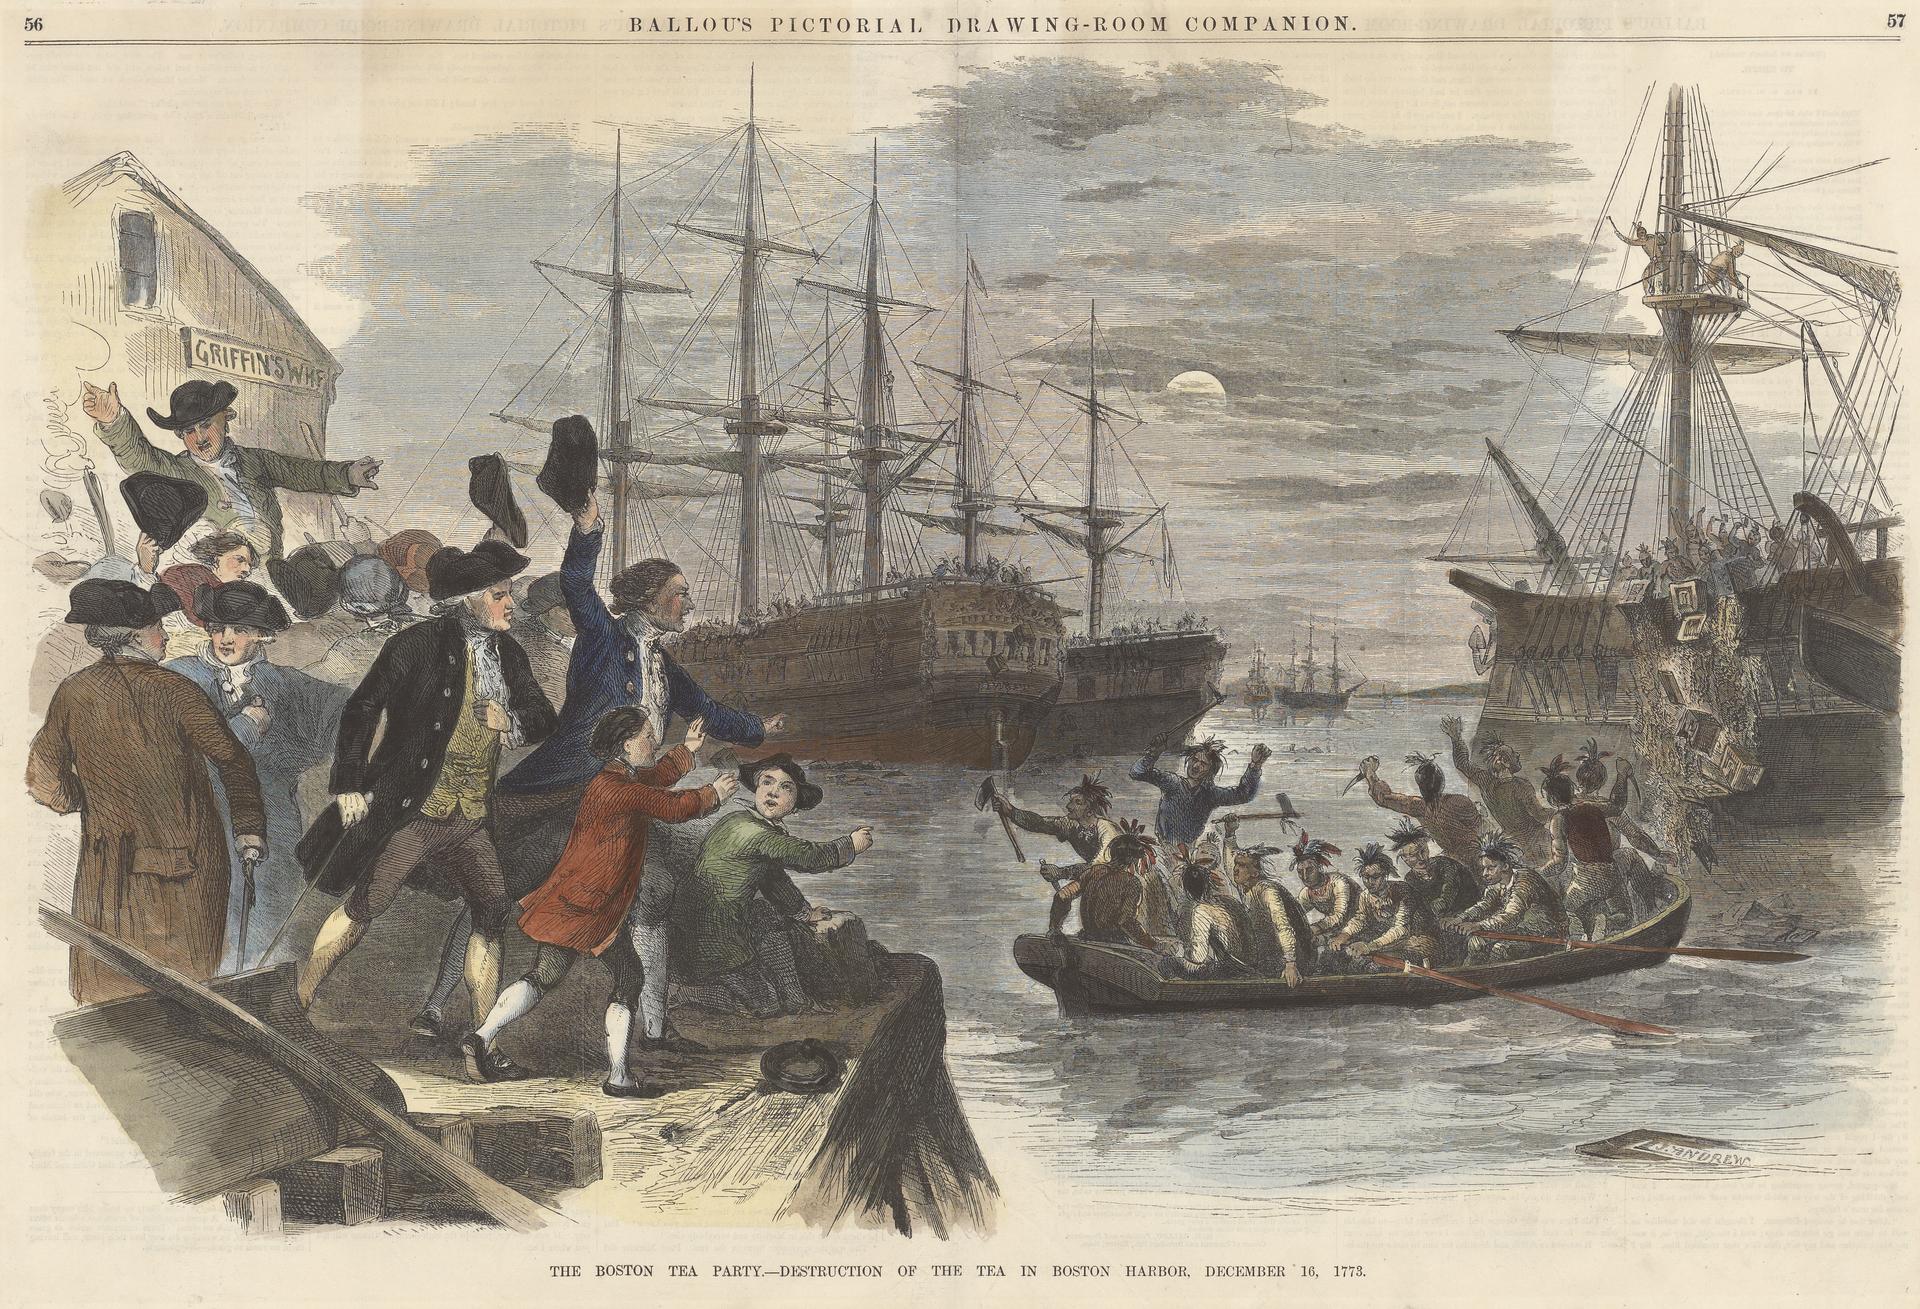 The Boston Tea Party.–Destruction of the Tea in Boston Harbor, December